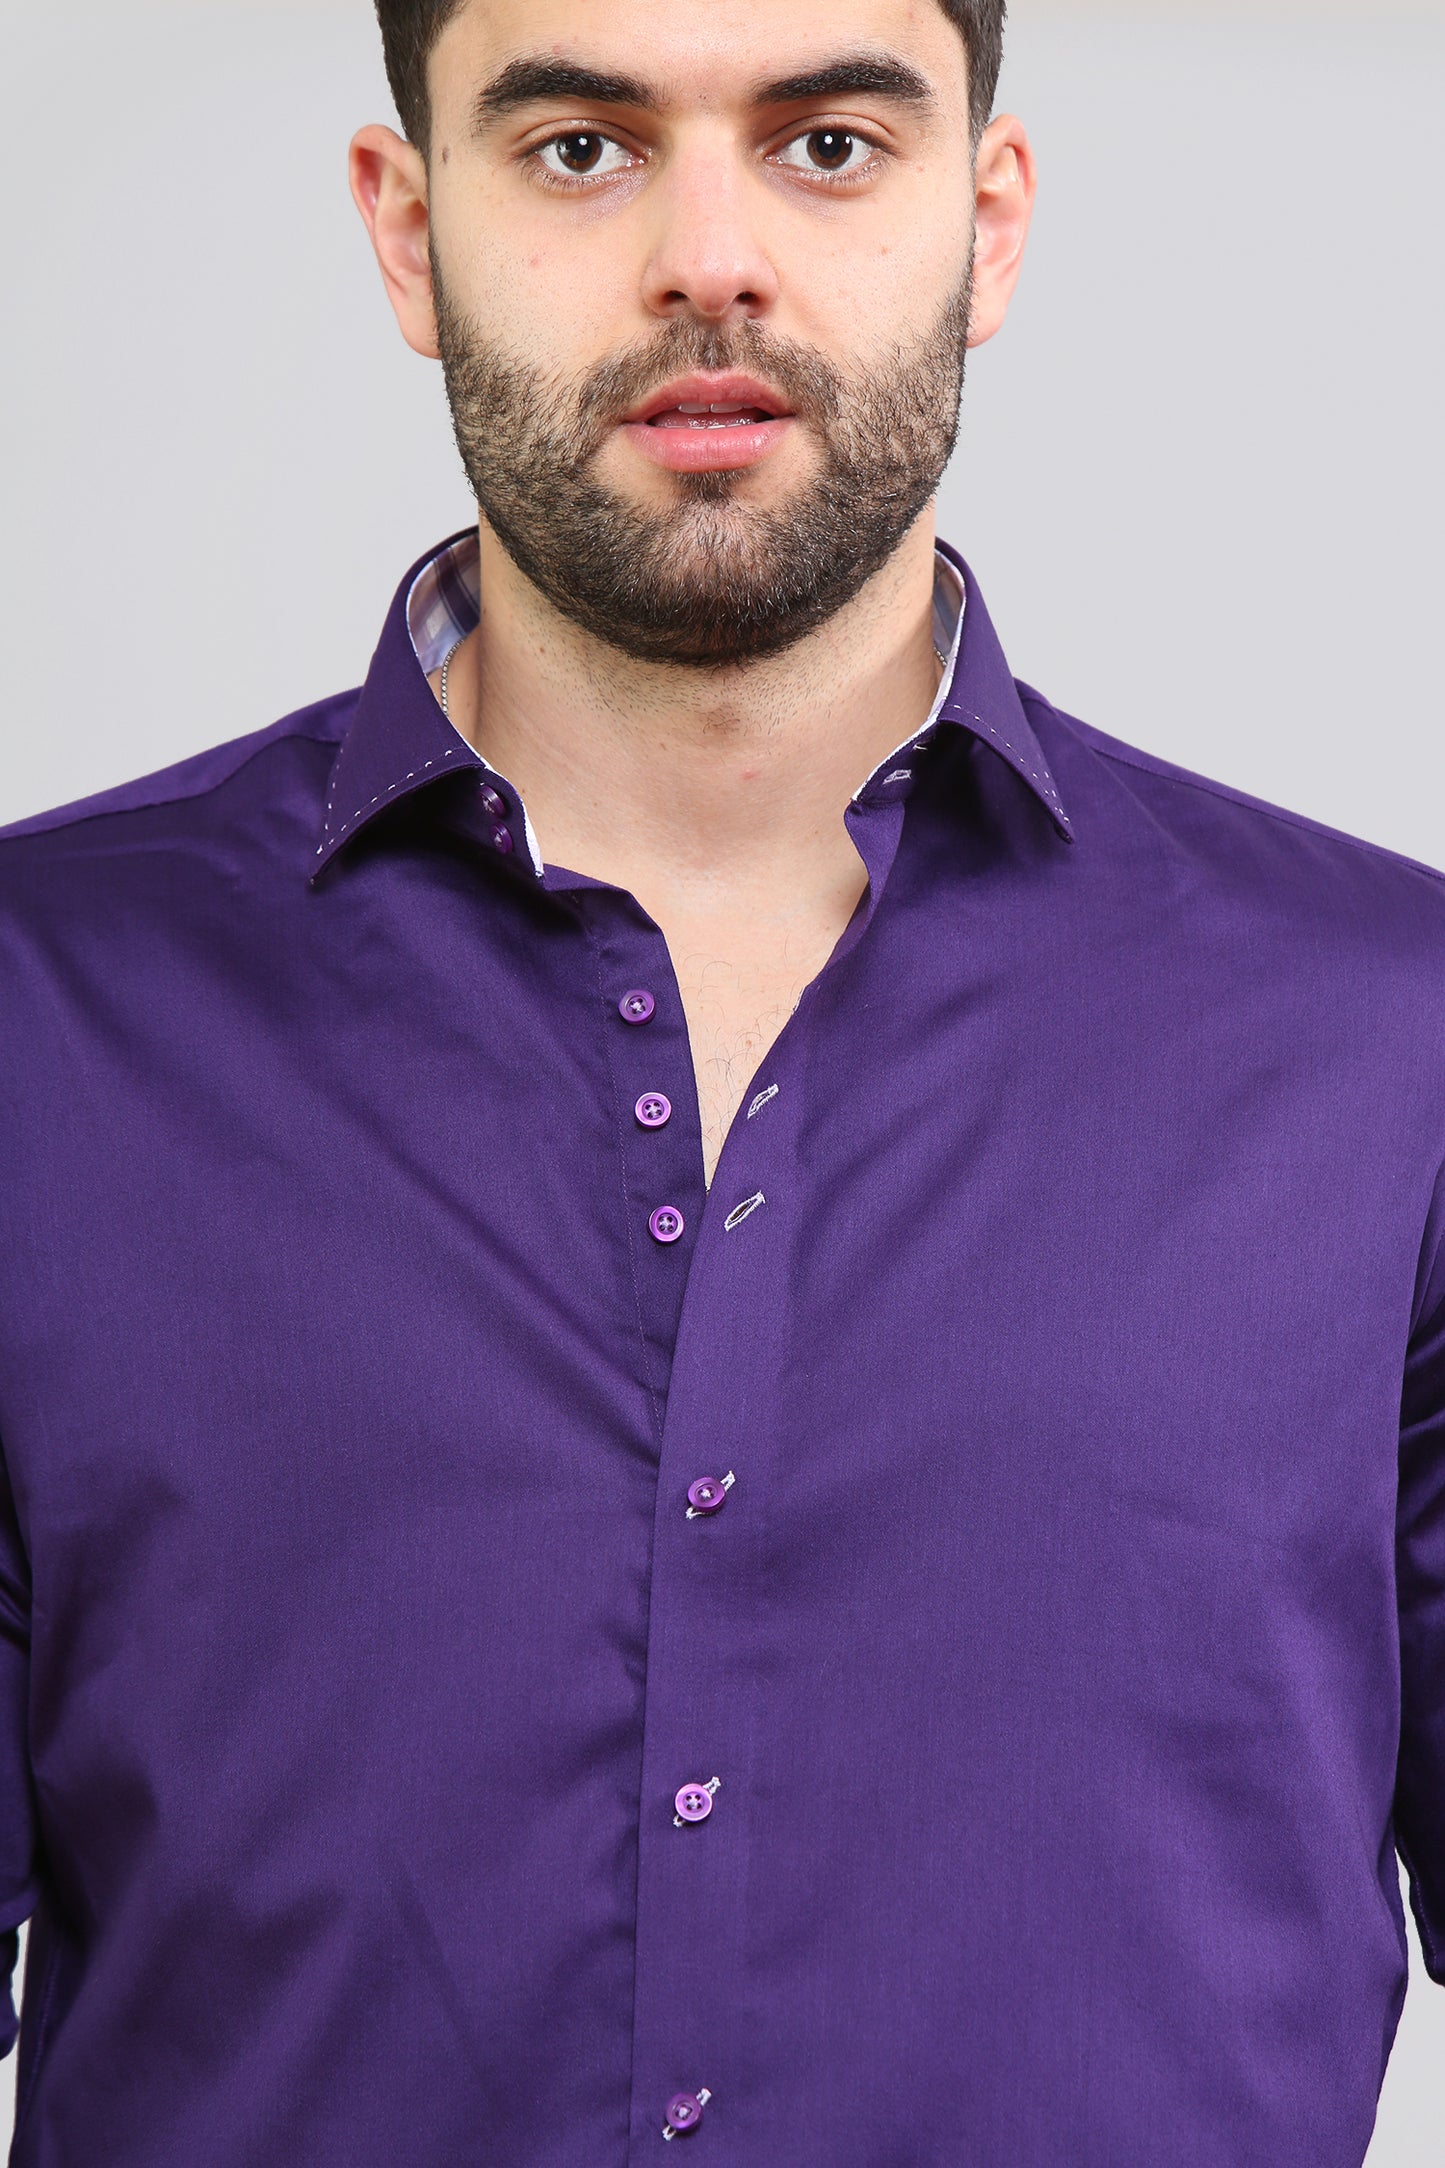 Men Purple Regular Fit Shirt 1003